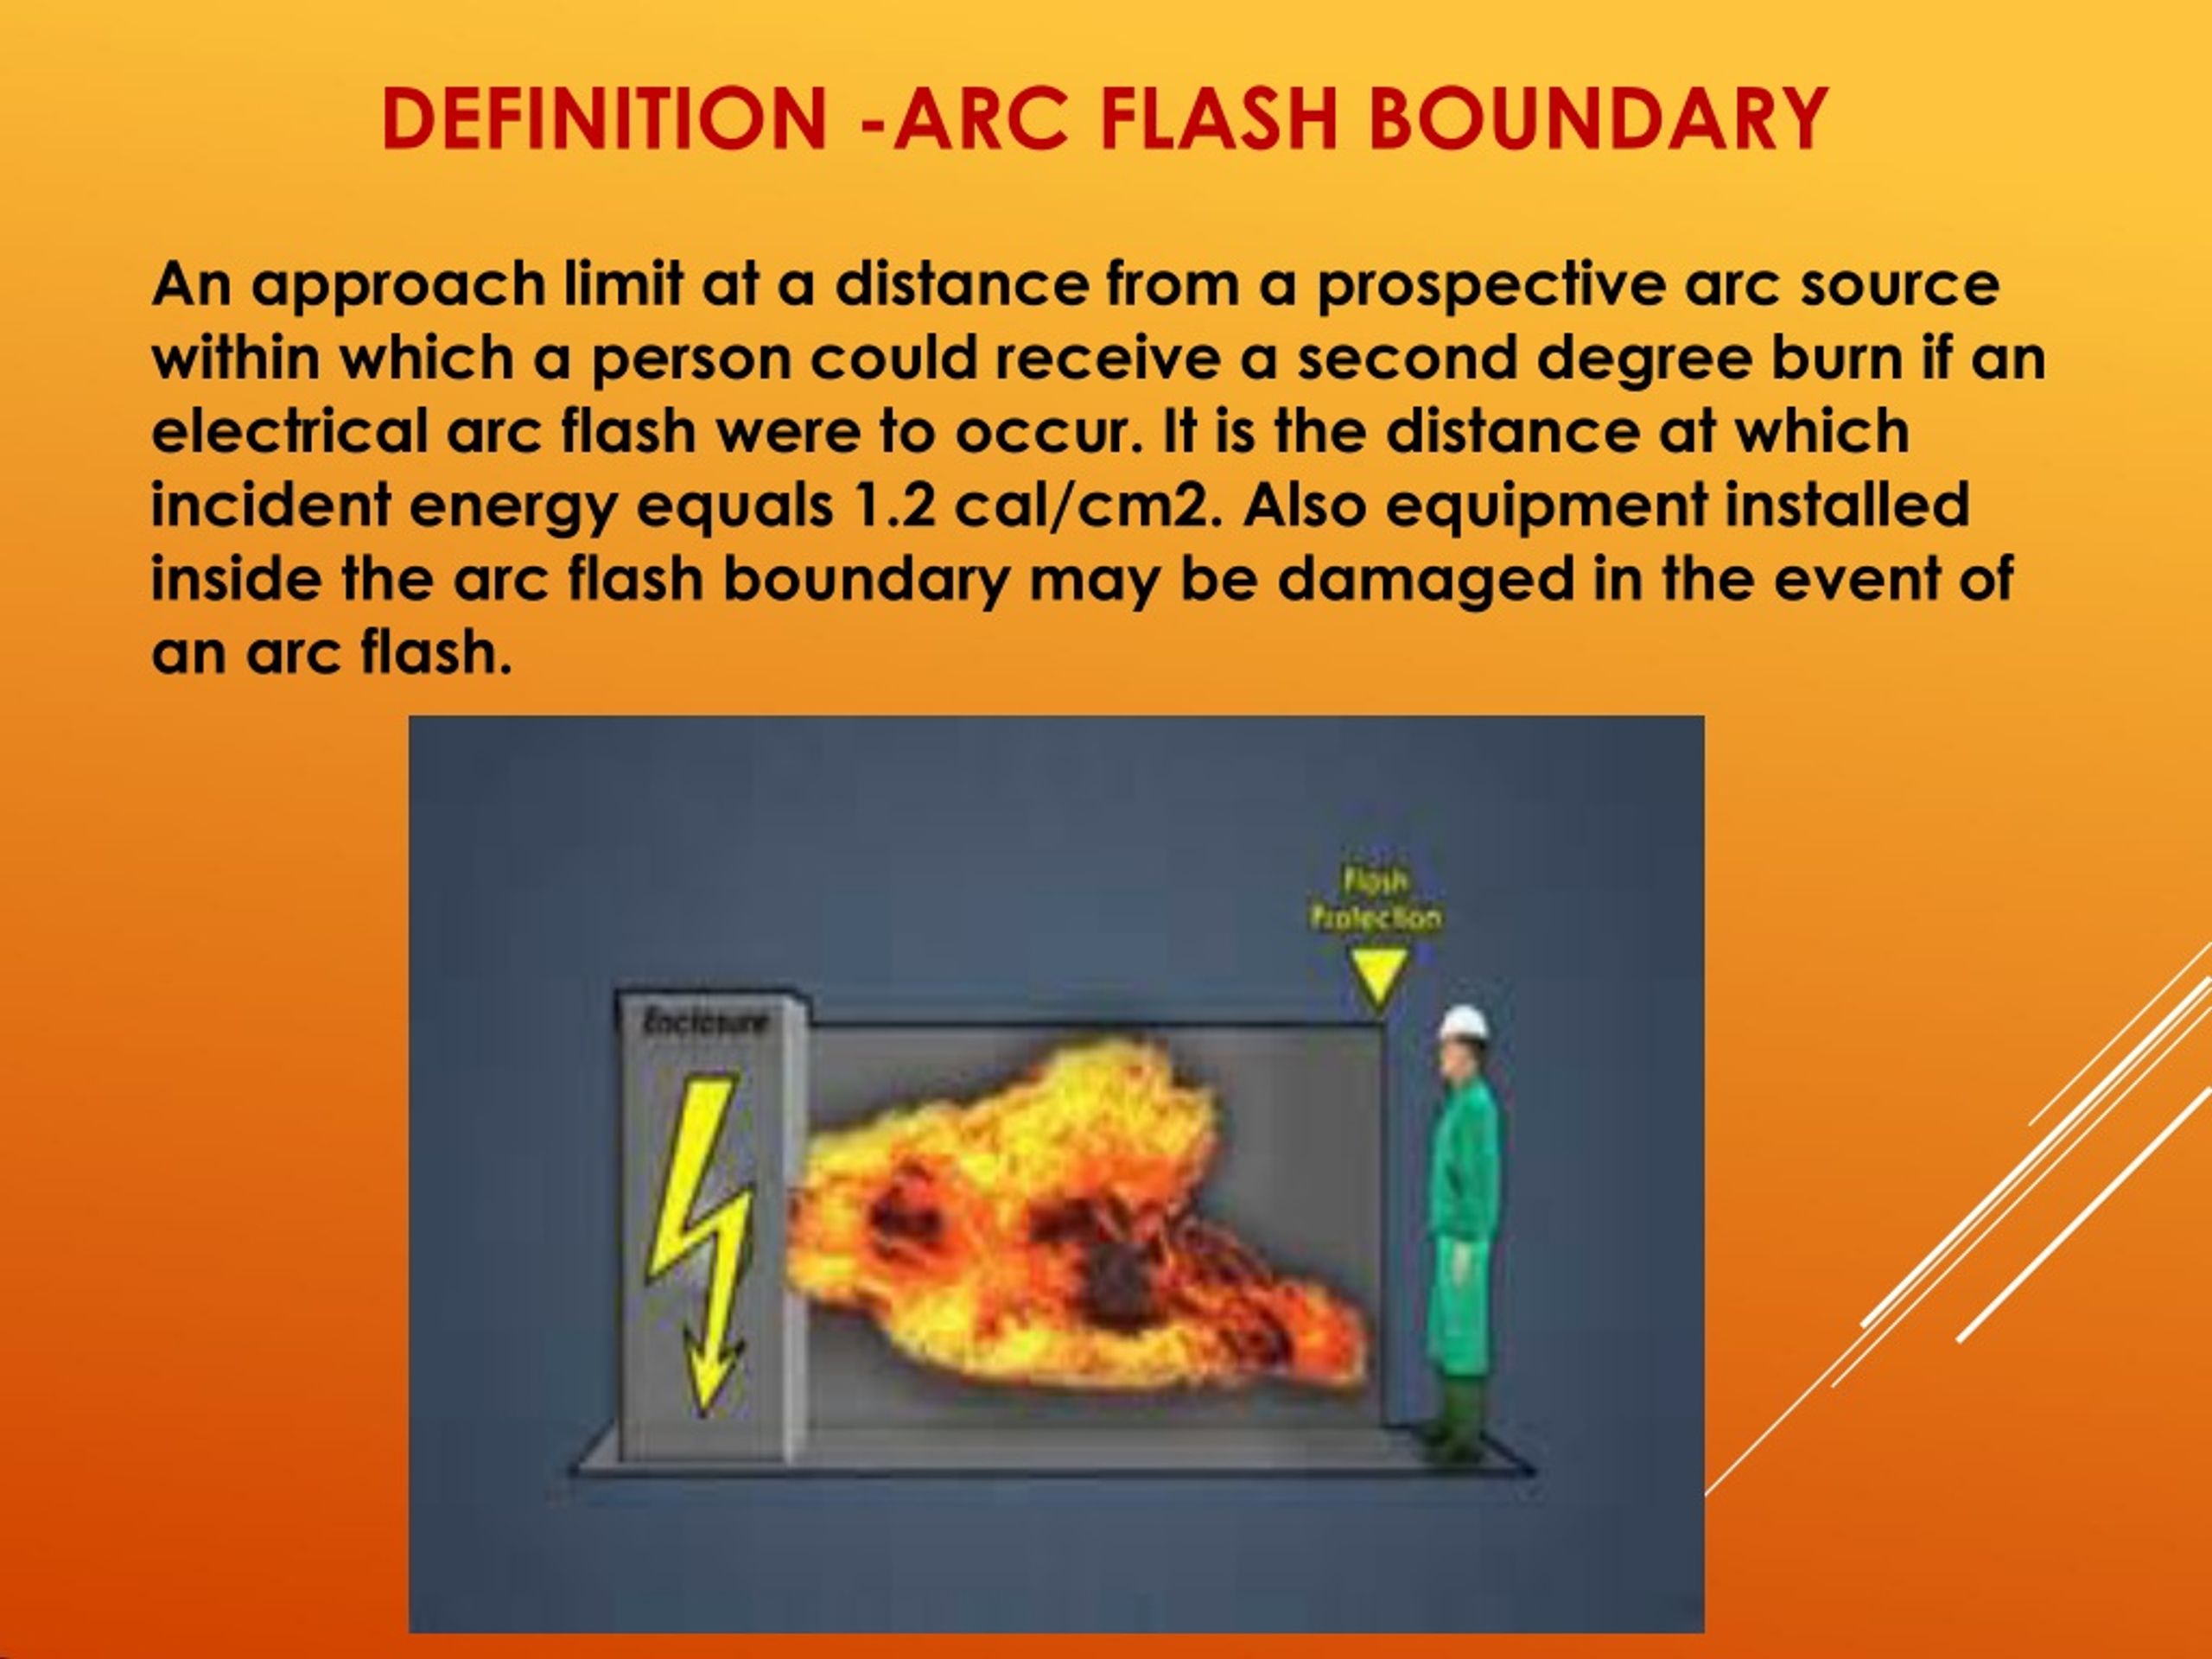 Arc flash boundary - miloway